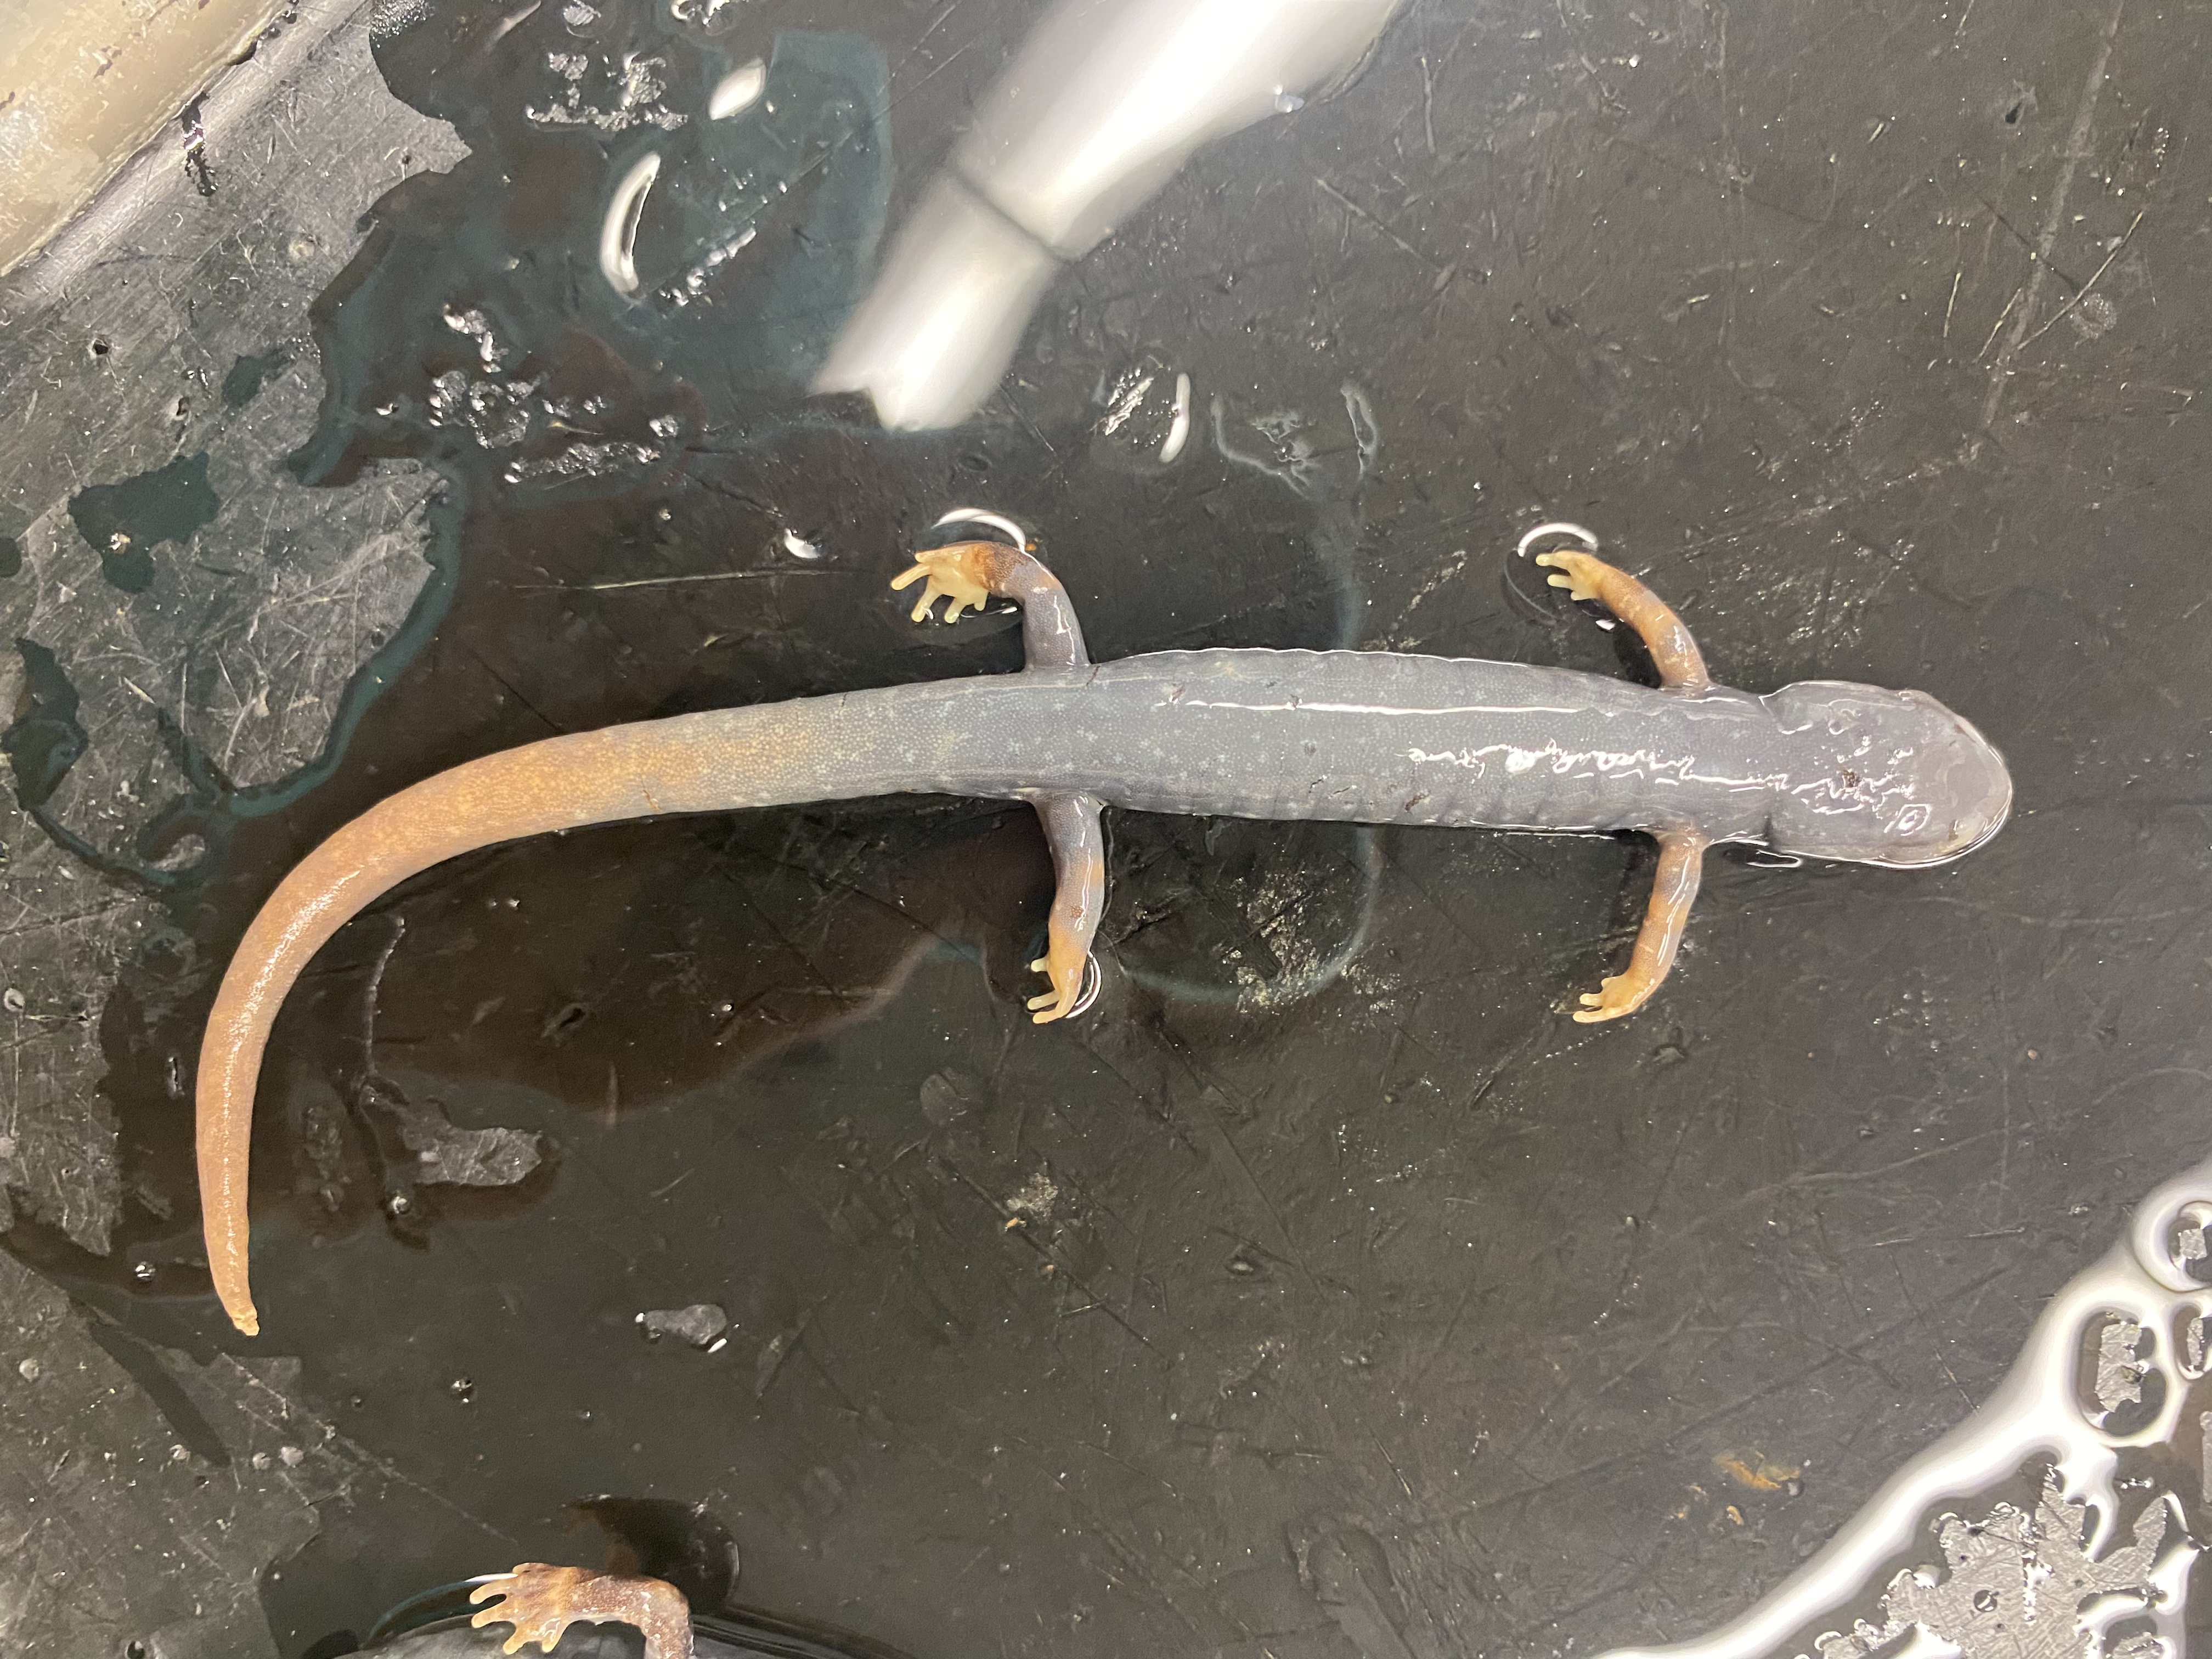 <p>Atlantic coast slimy salamander</p>